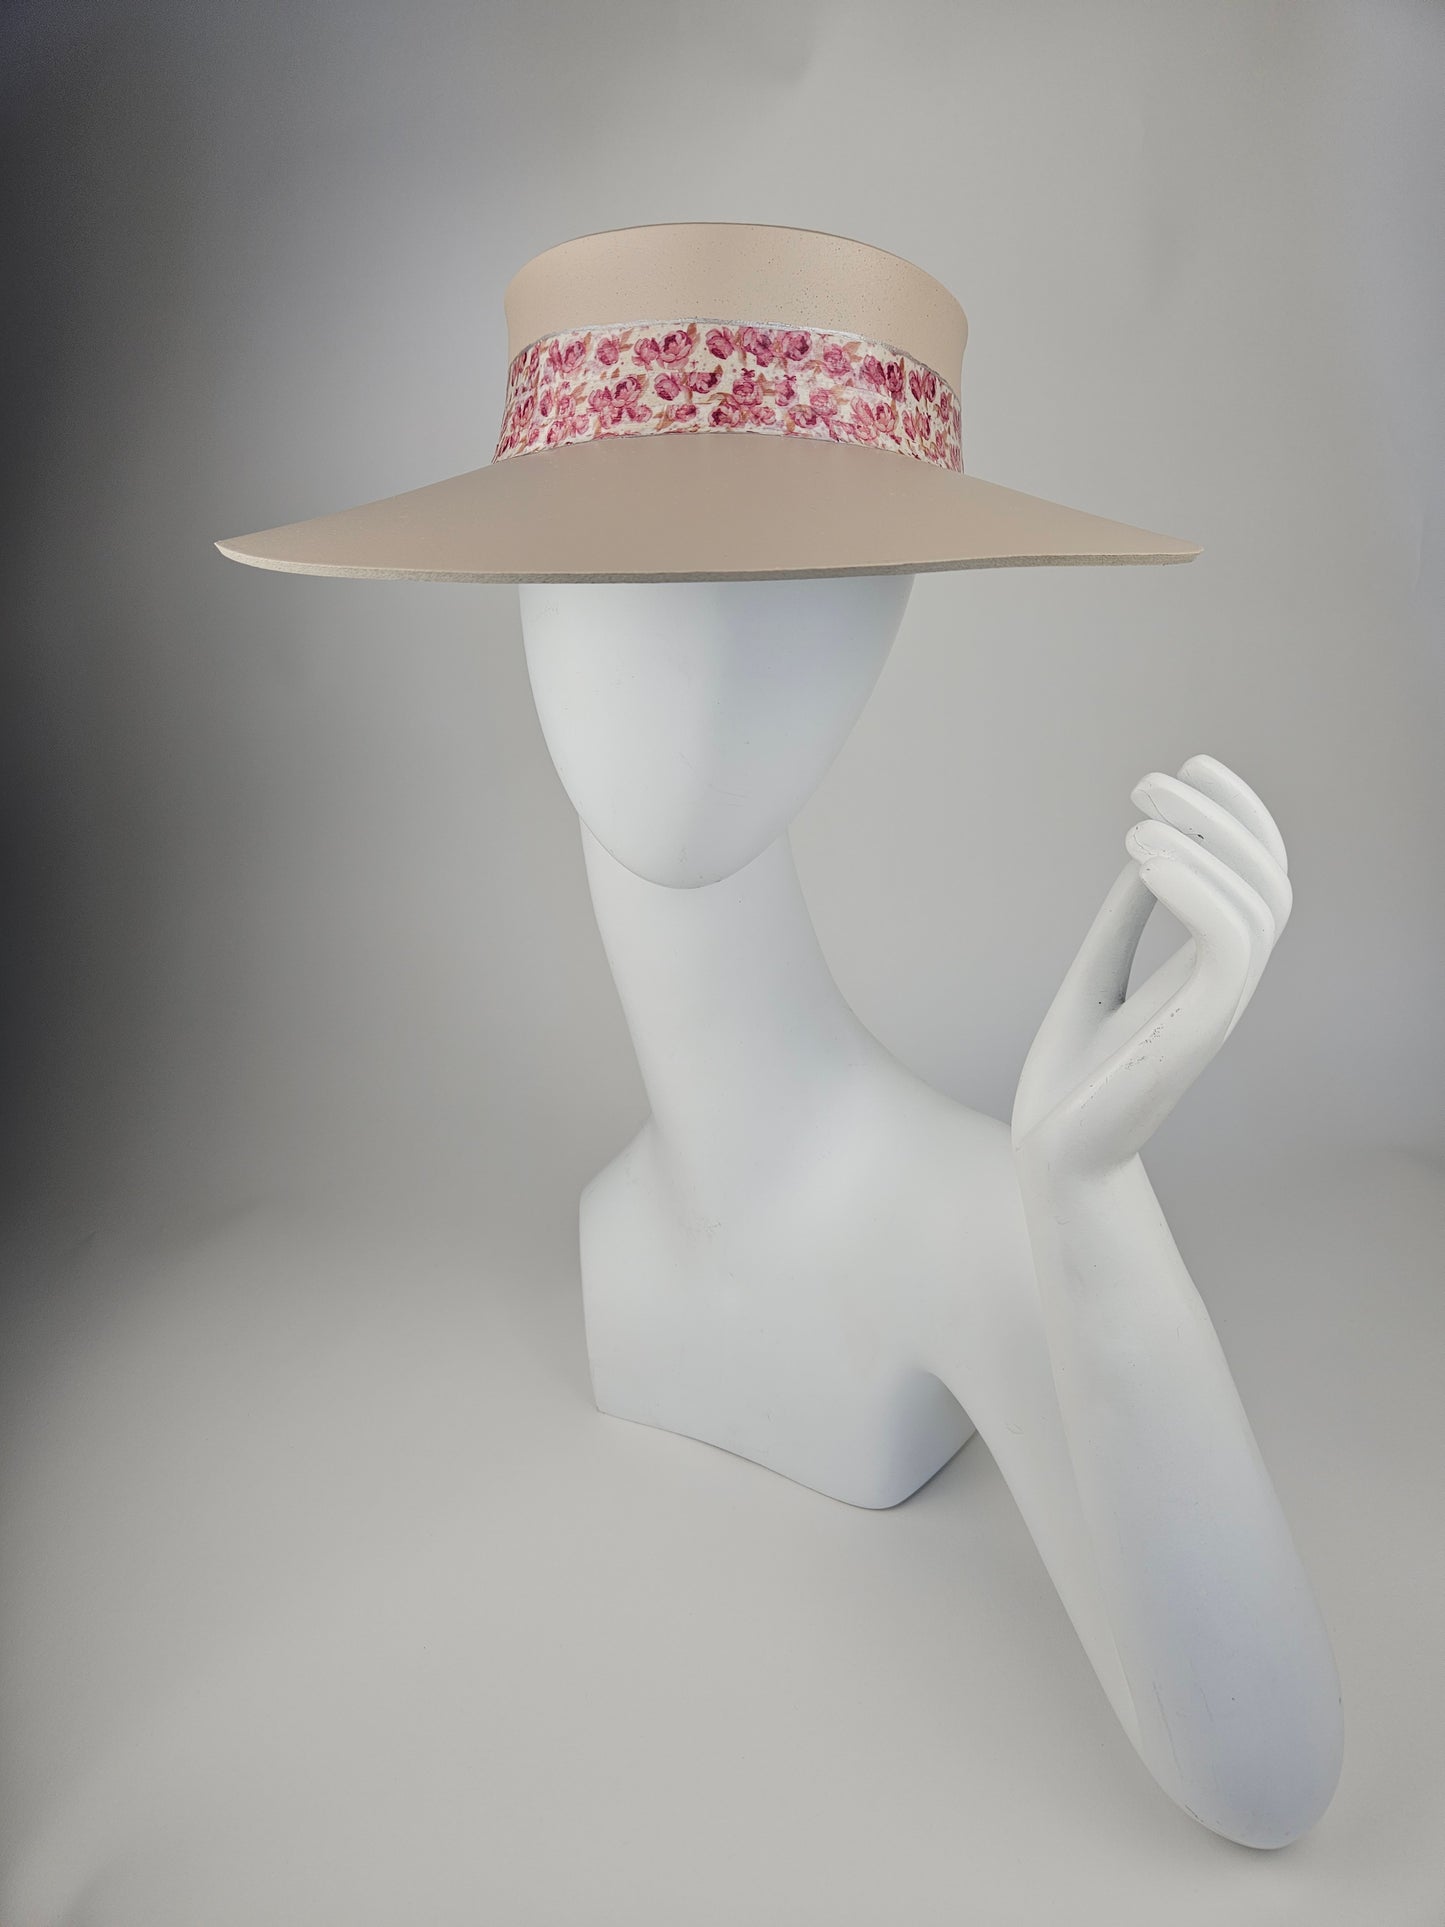 Peach Gray Audrey Foam Sun Visor Hat with Lovely Pink Floral Band: Tea, Walks, Brunch, Fancy, Golf, Summer, Church, No Headache, Pool